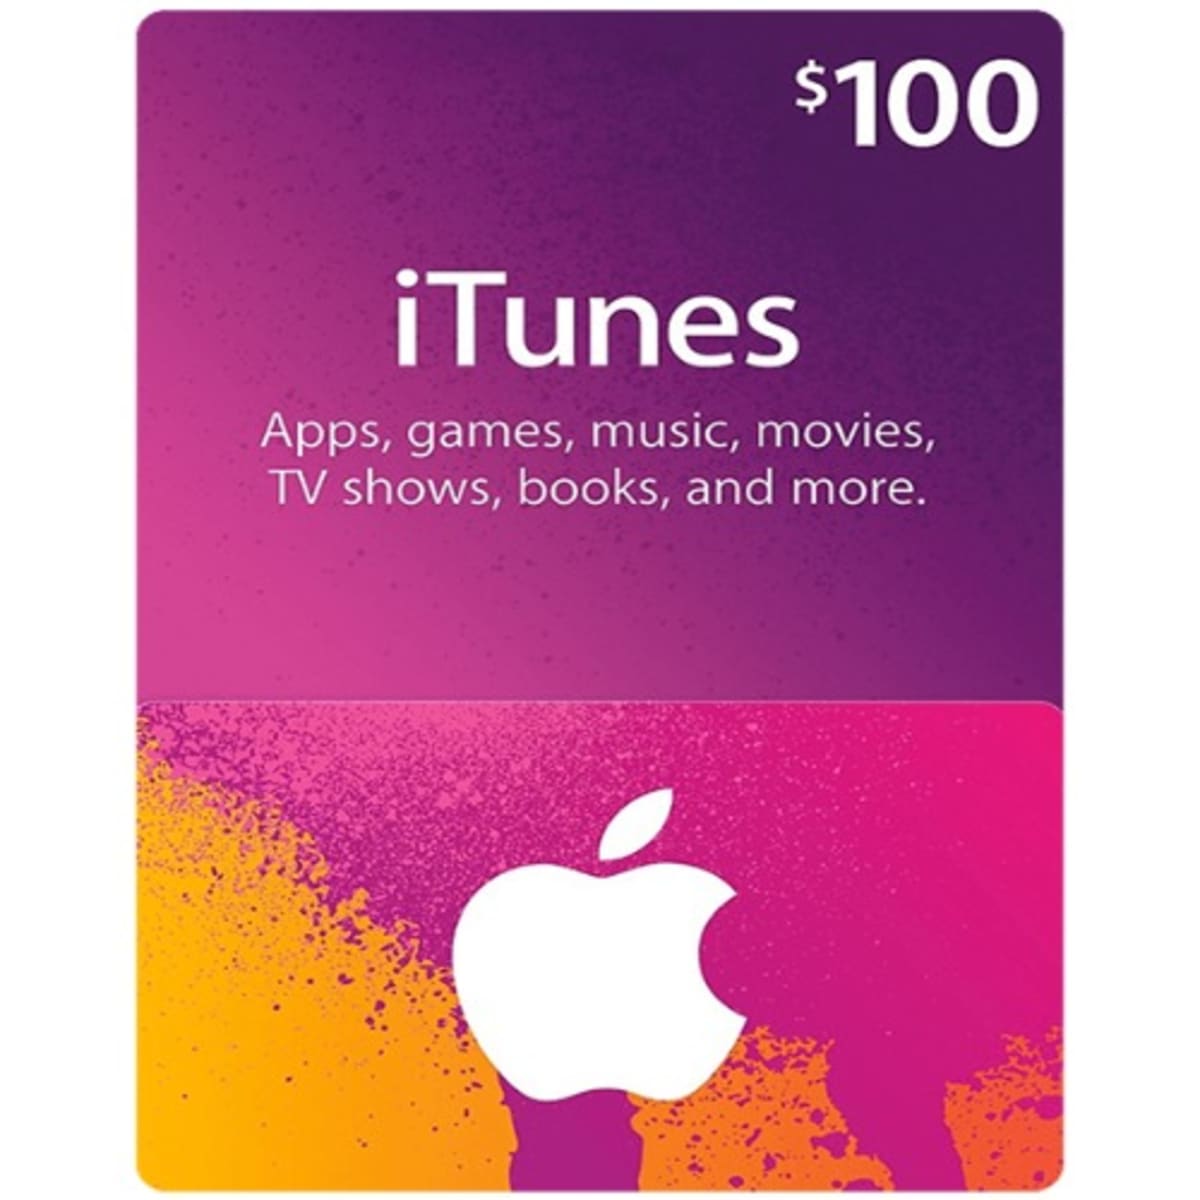 Apple US - 500 USD - Digital Gift Card [UNITED STATES]